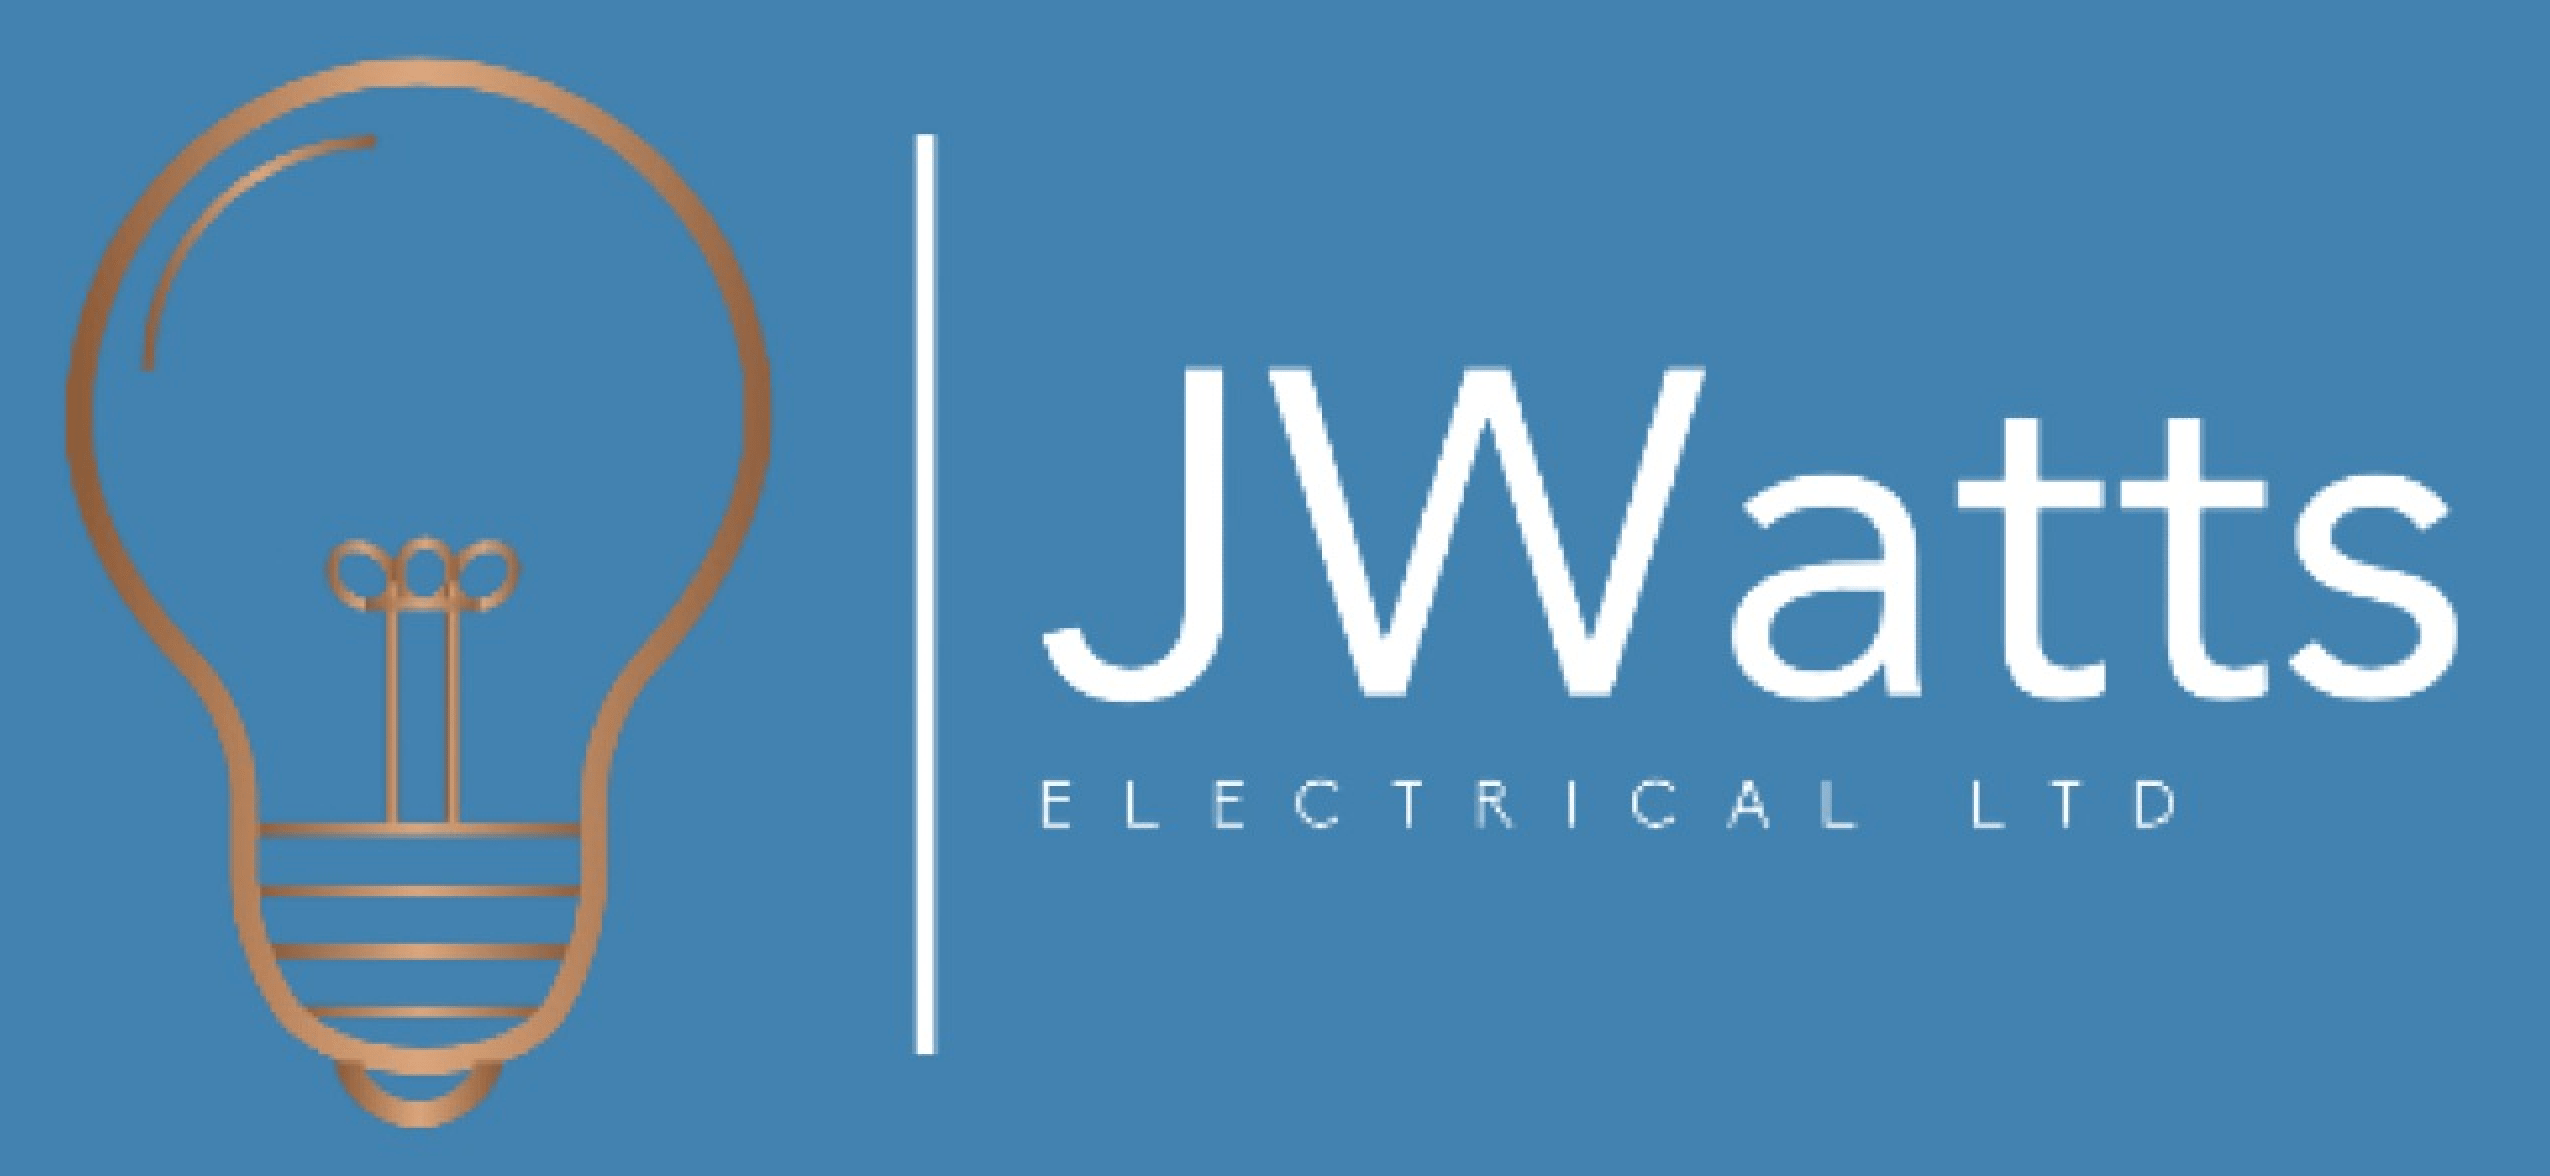 jwatts electrical logo 2